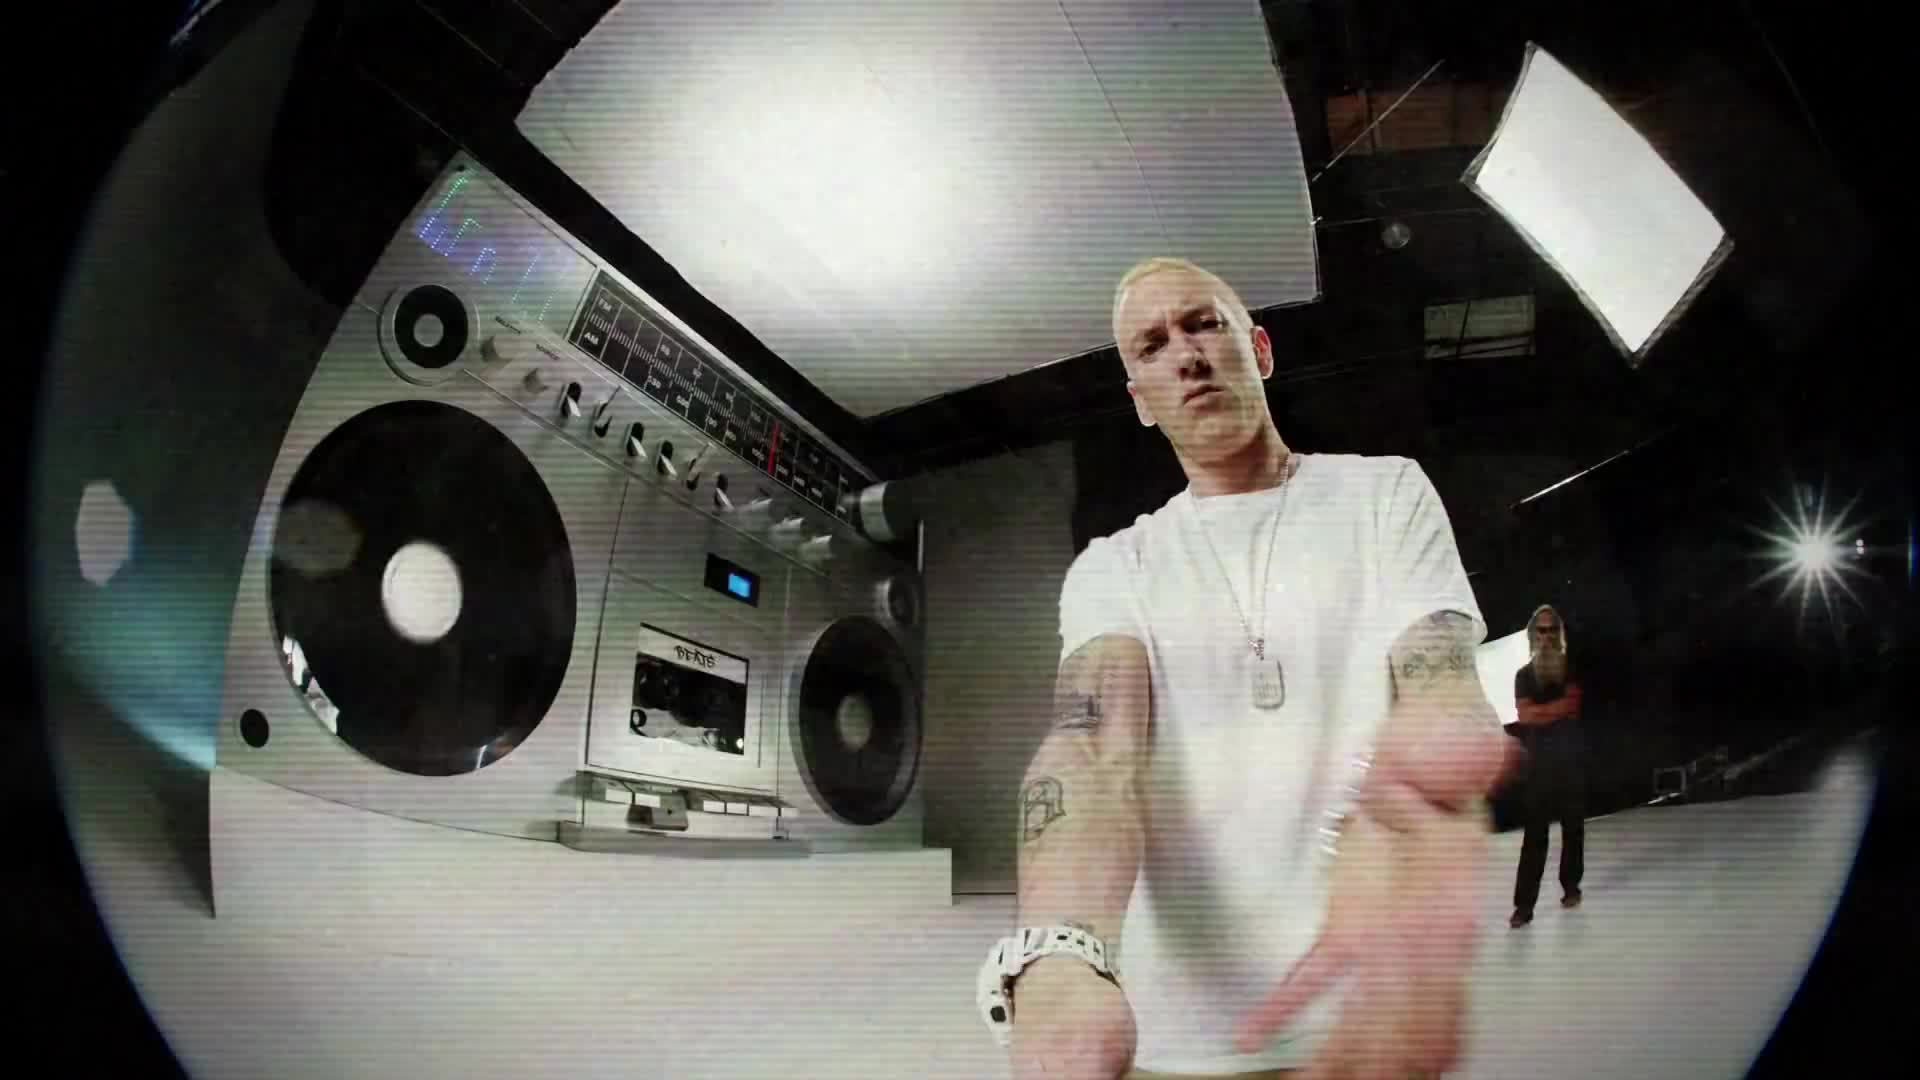 Eminem - Berzerk {Music Video} - EMINEM Photo (38284532) - Fanpop